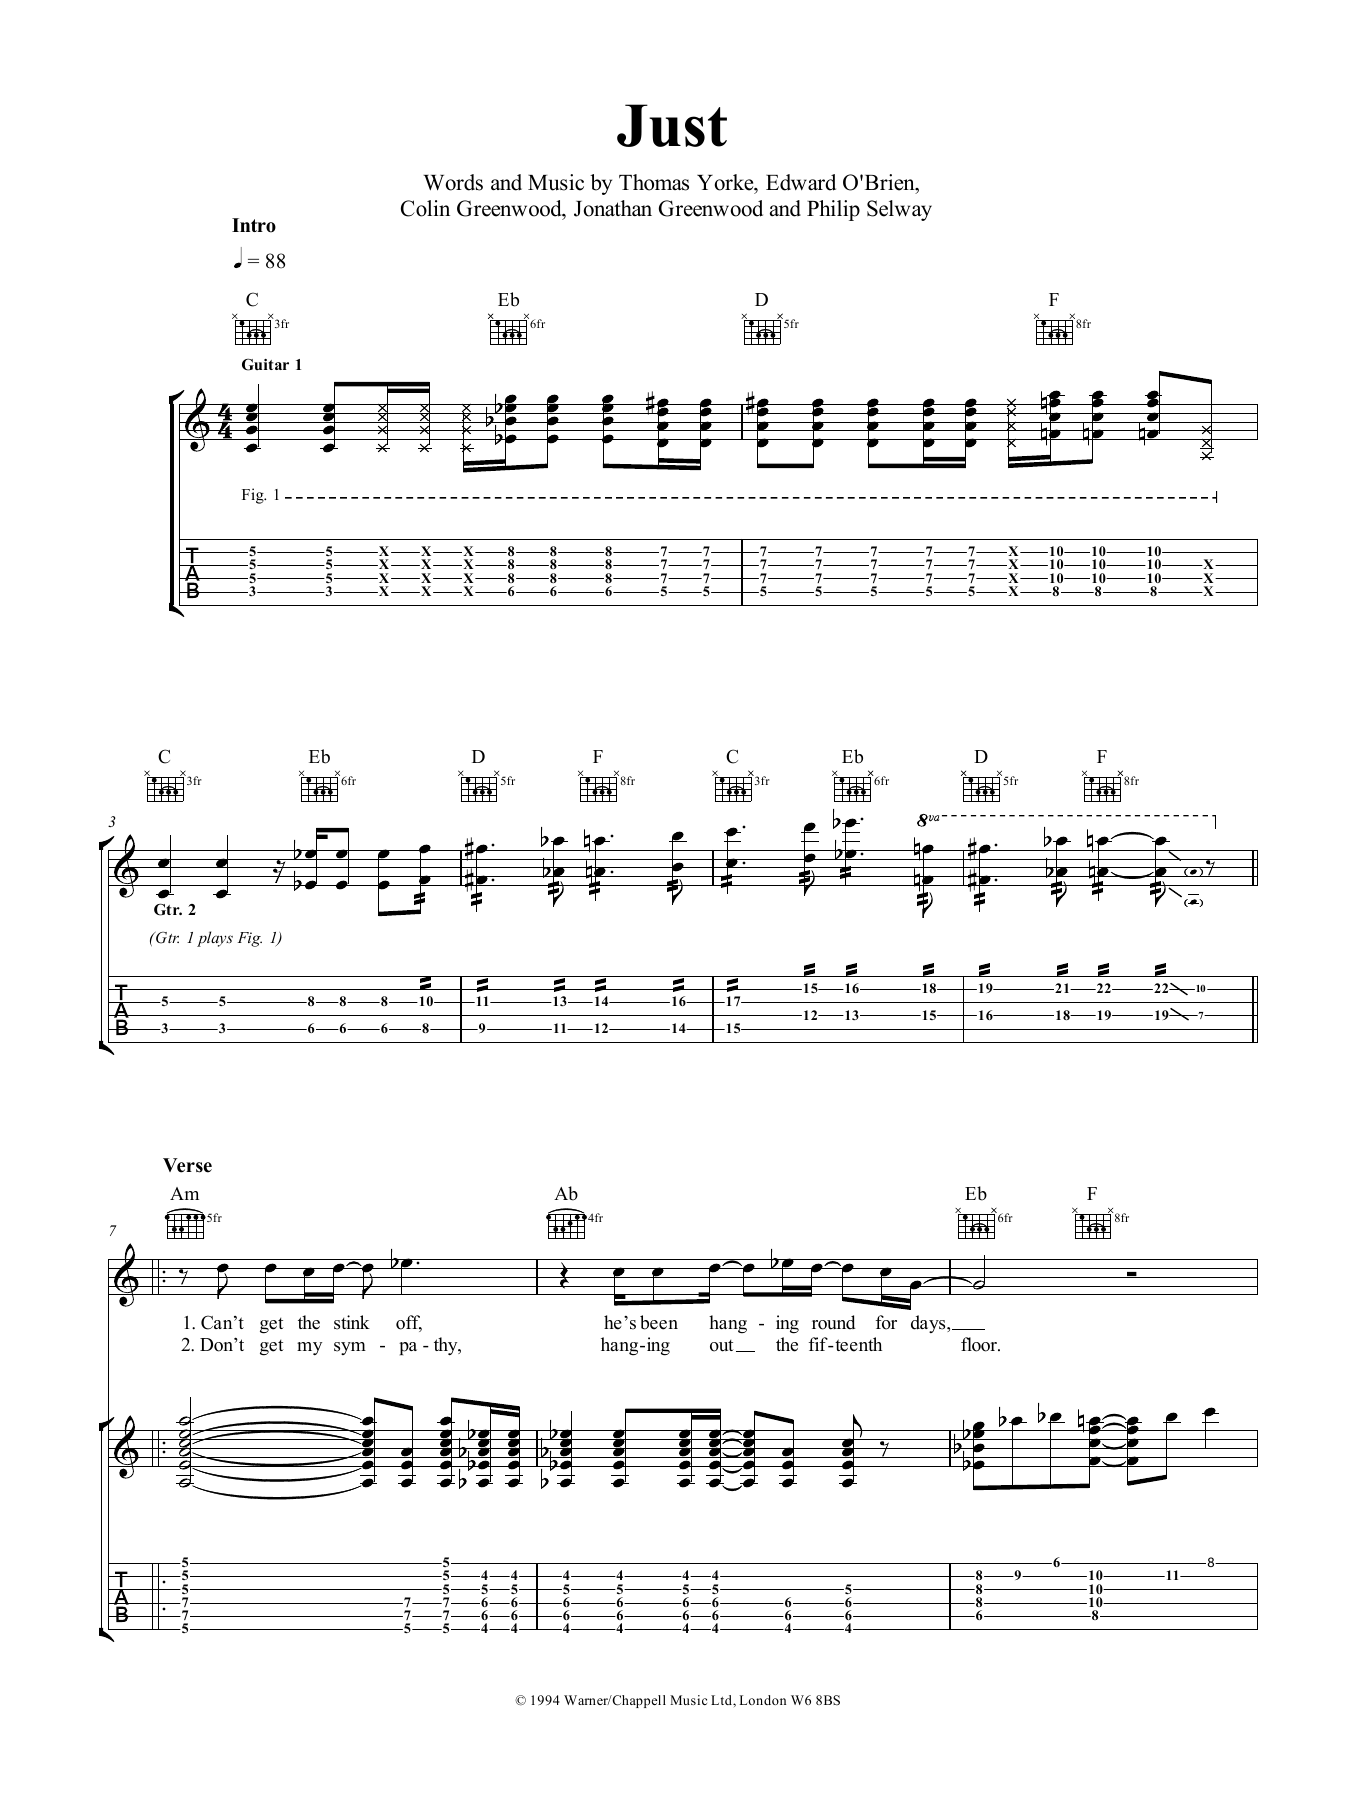 Radiohead Just Sheet Music Notes & Chords for Guitar Tab - Download or Print PDF